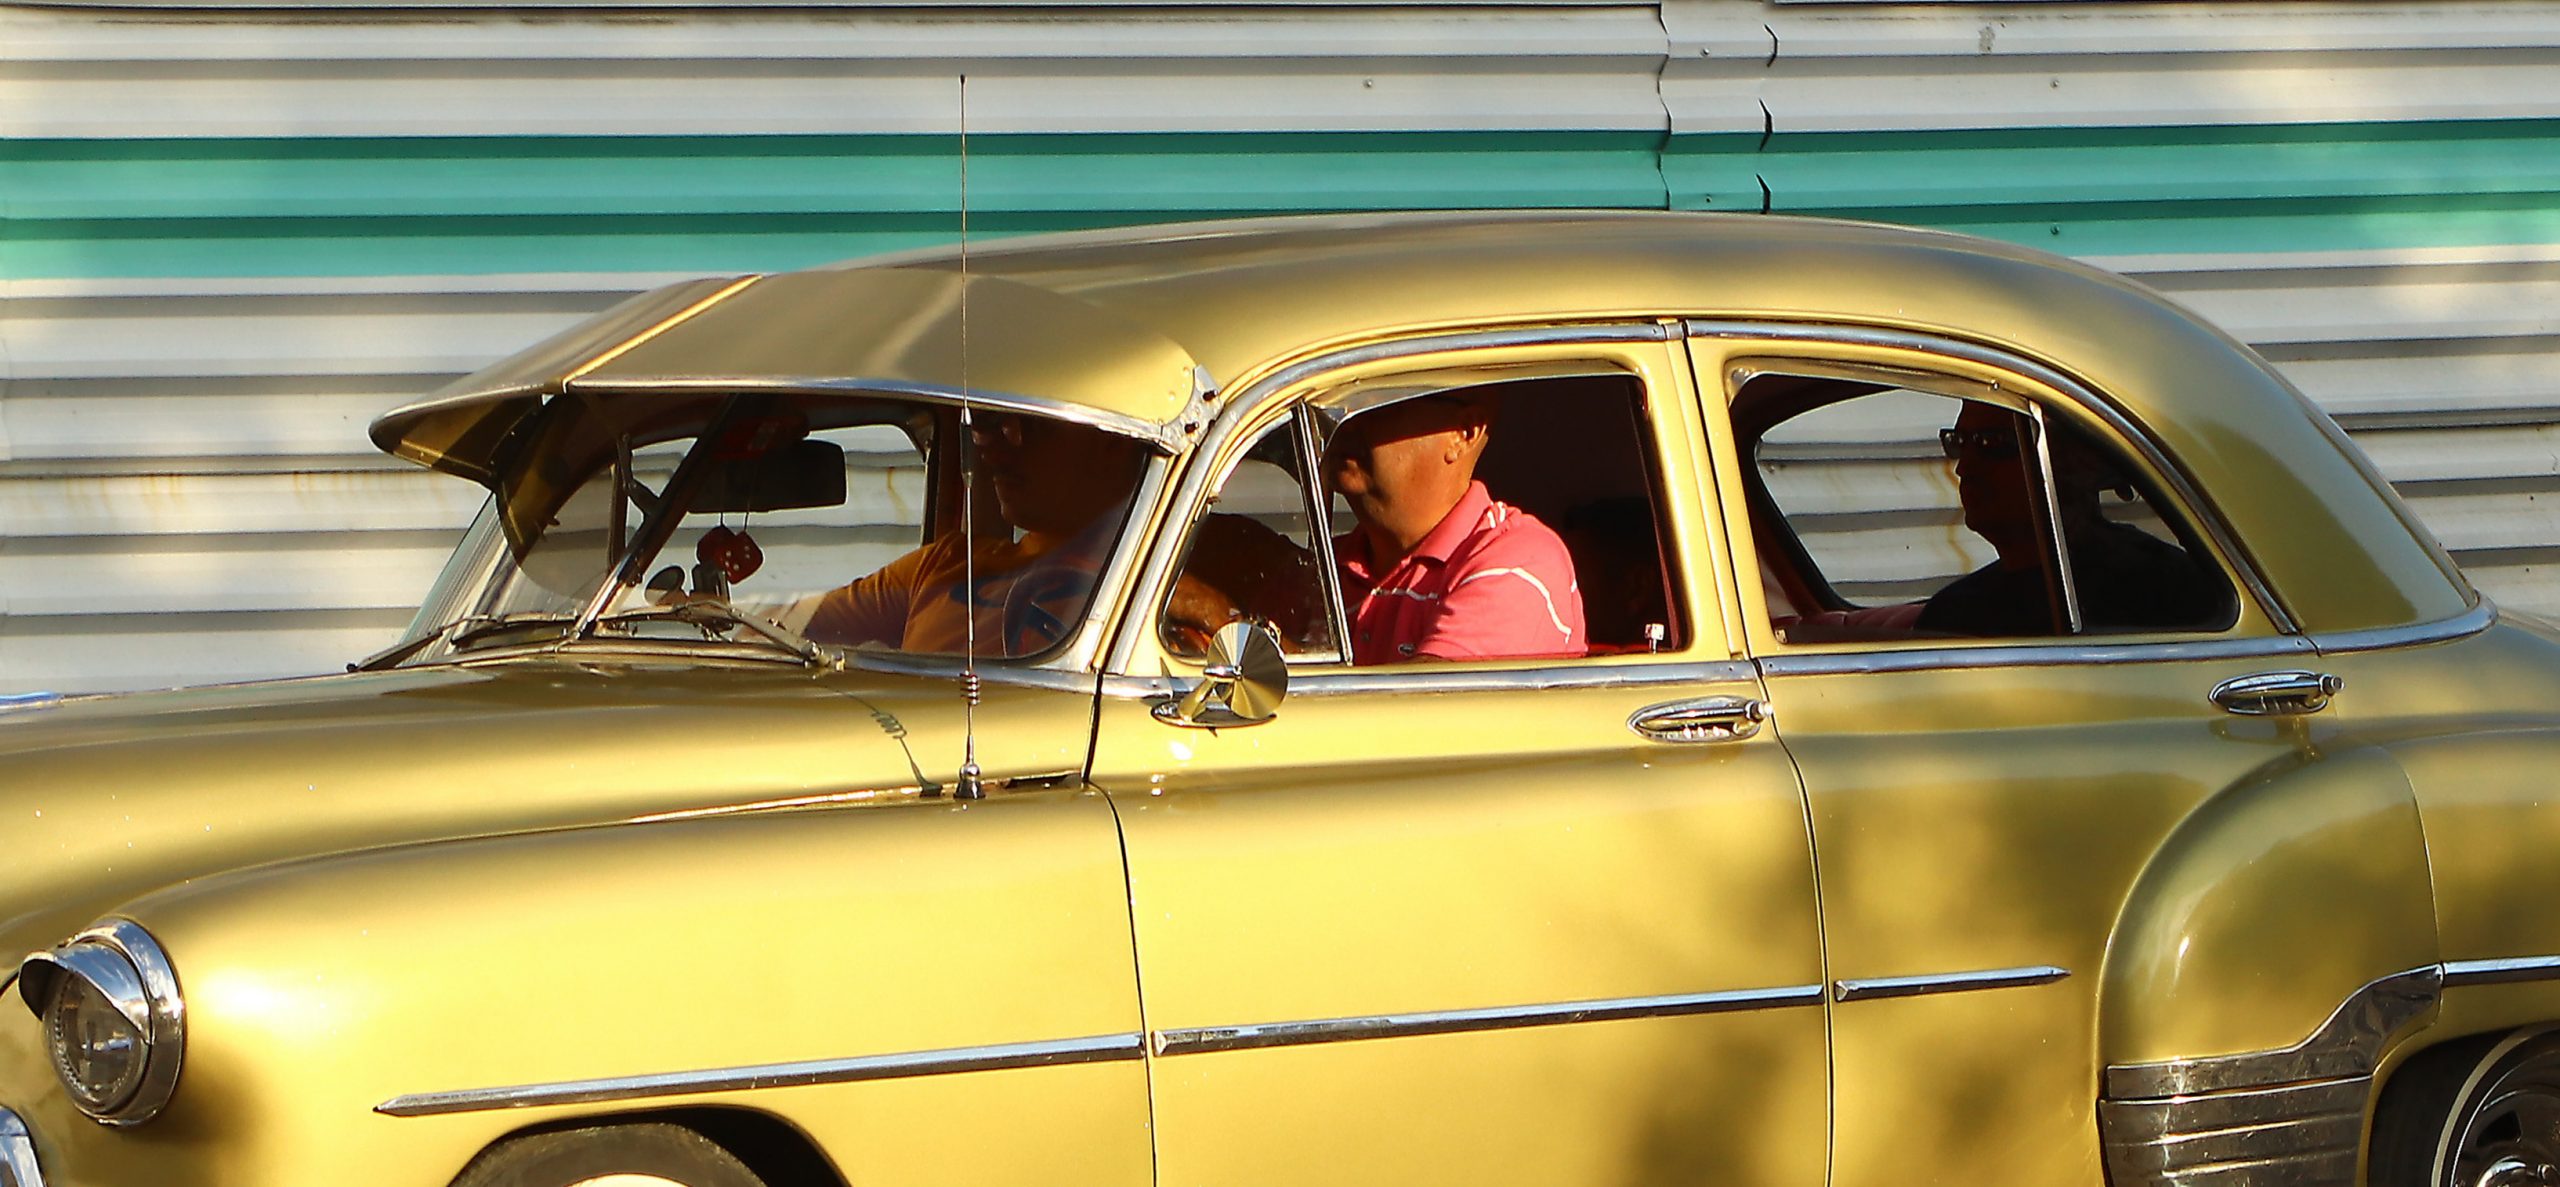 Occupants of Golden car. Havana, Cuba.